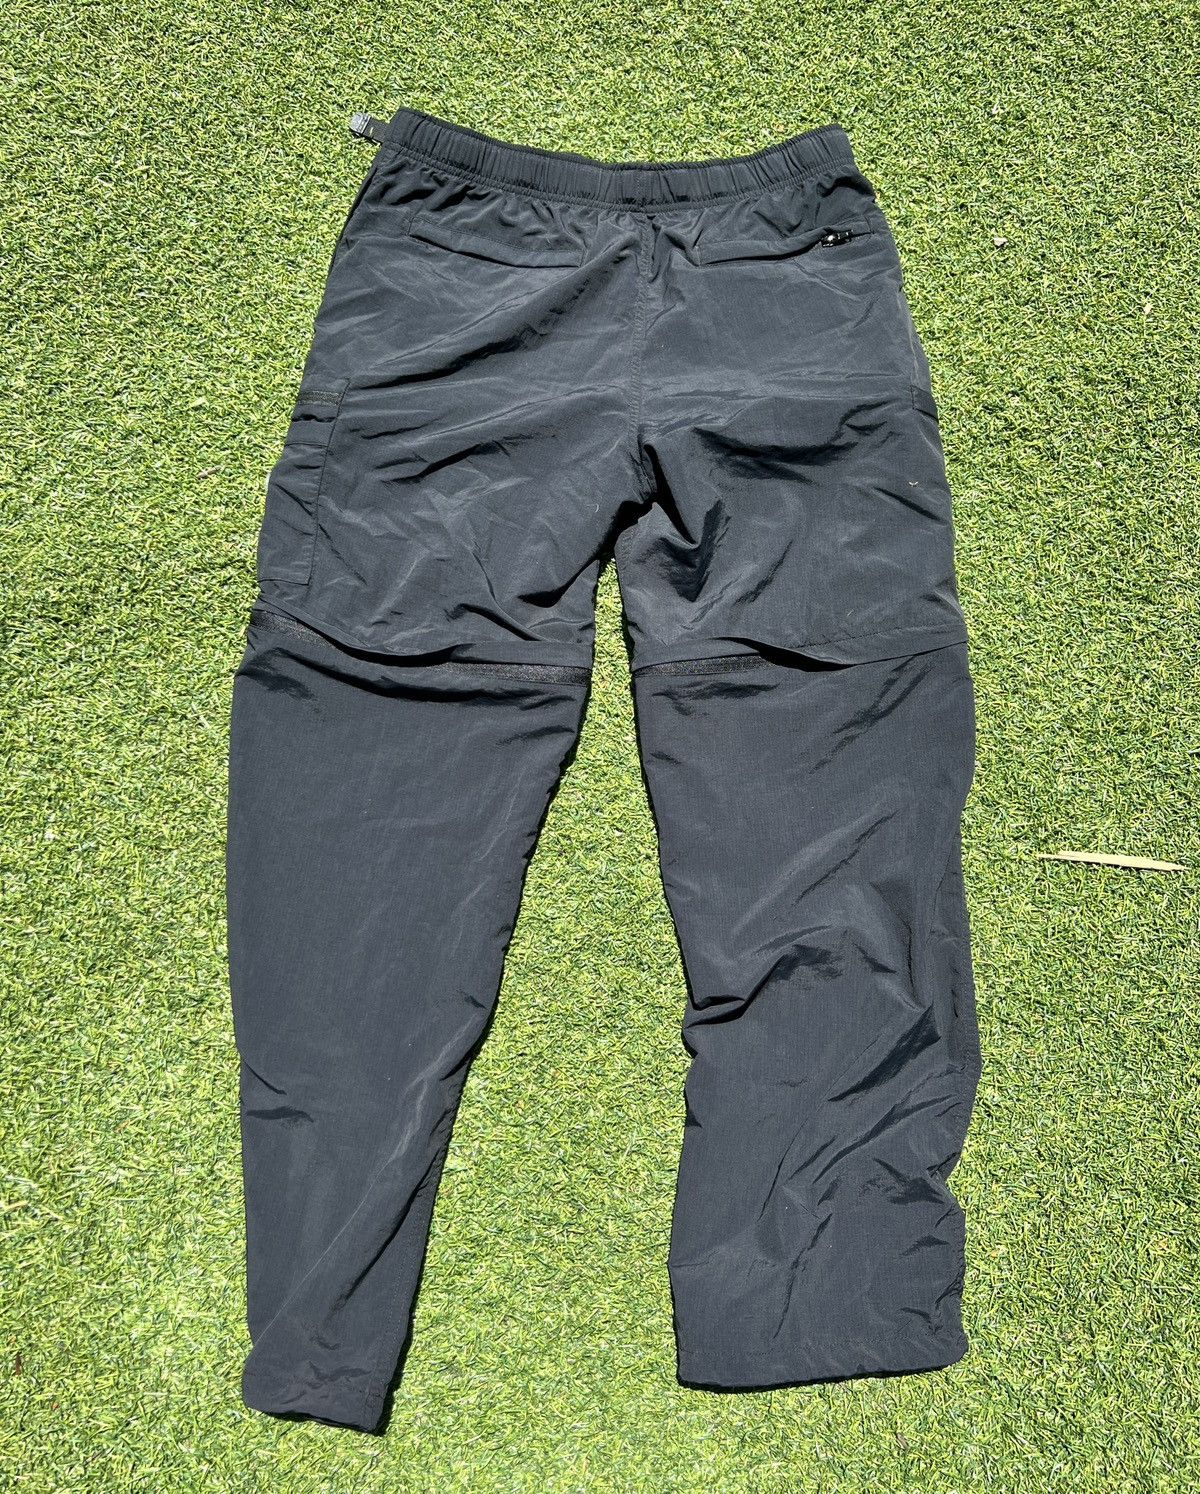 Golf Wang Golf Wang Tyrie Pants Black Size US 32 / EU 48 - 2 Preview